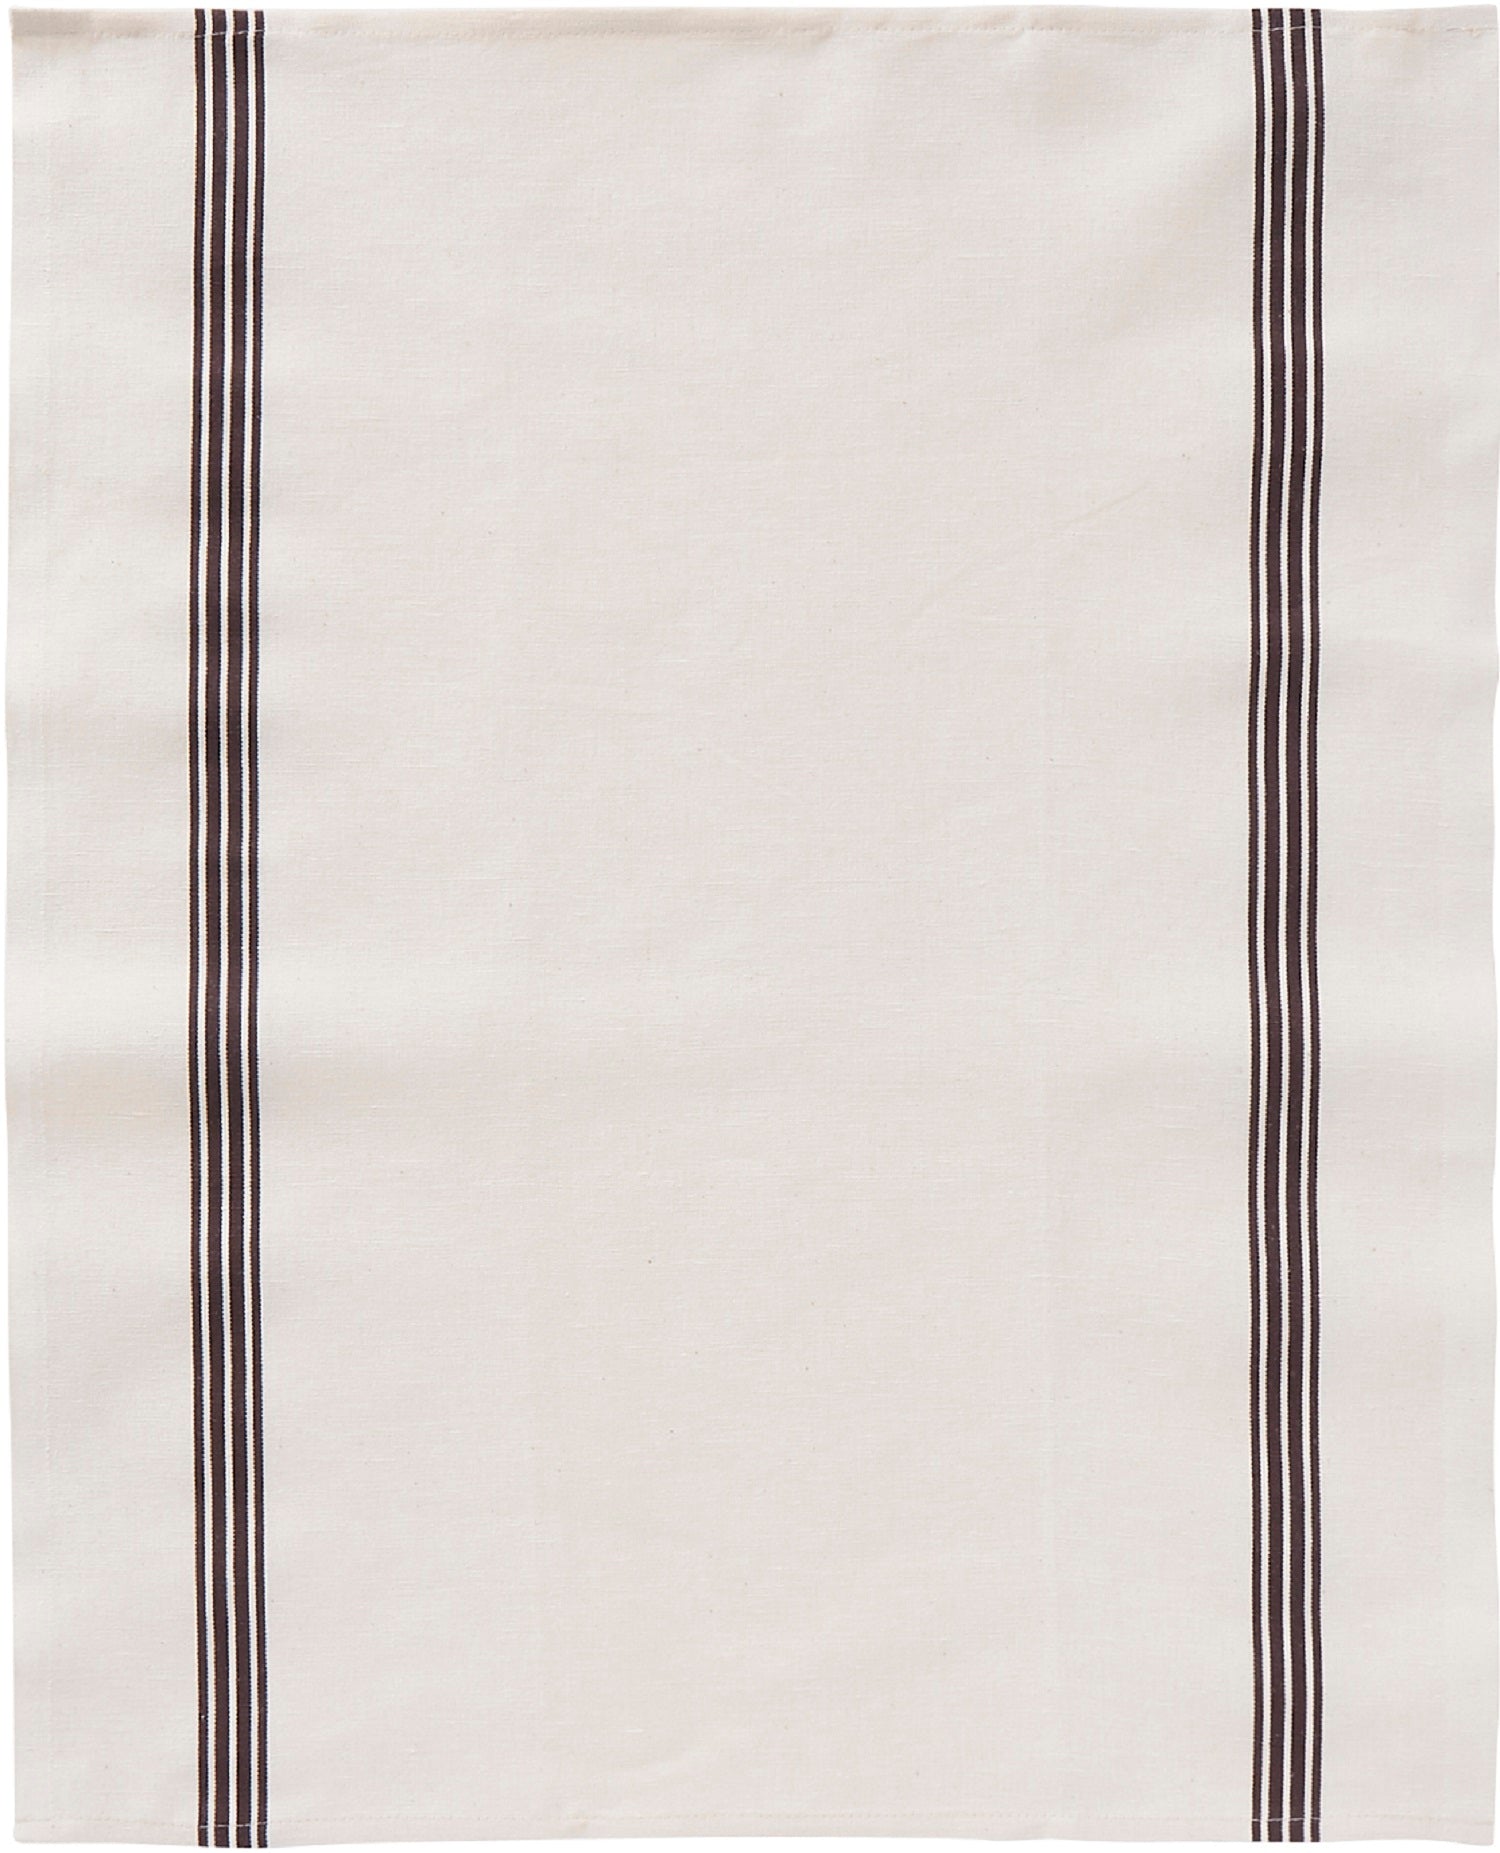 Charvet Editions "Piano" (Marron), Woven linen union tea towel. Made in France.